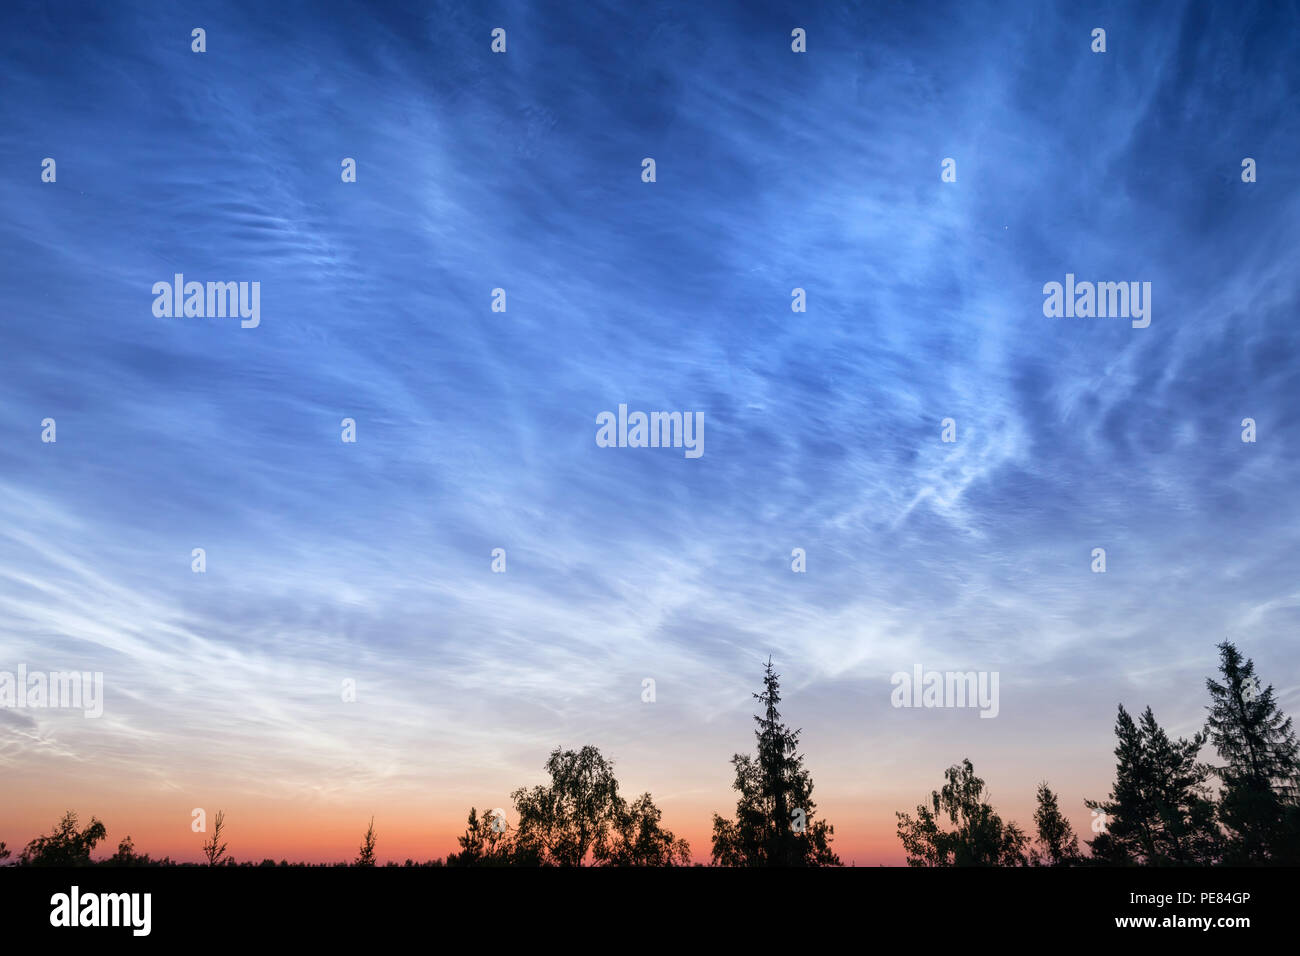 Nacht bewölkt Himmel über tiefen Wald. Abstrakte outdoor Szene bei Sonnenuntergang. Südkarelien, Russland Stockfoto